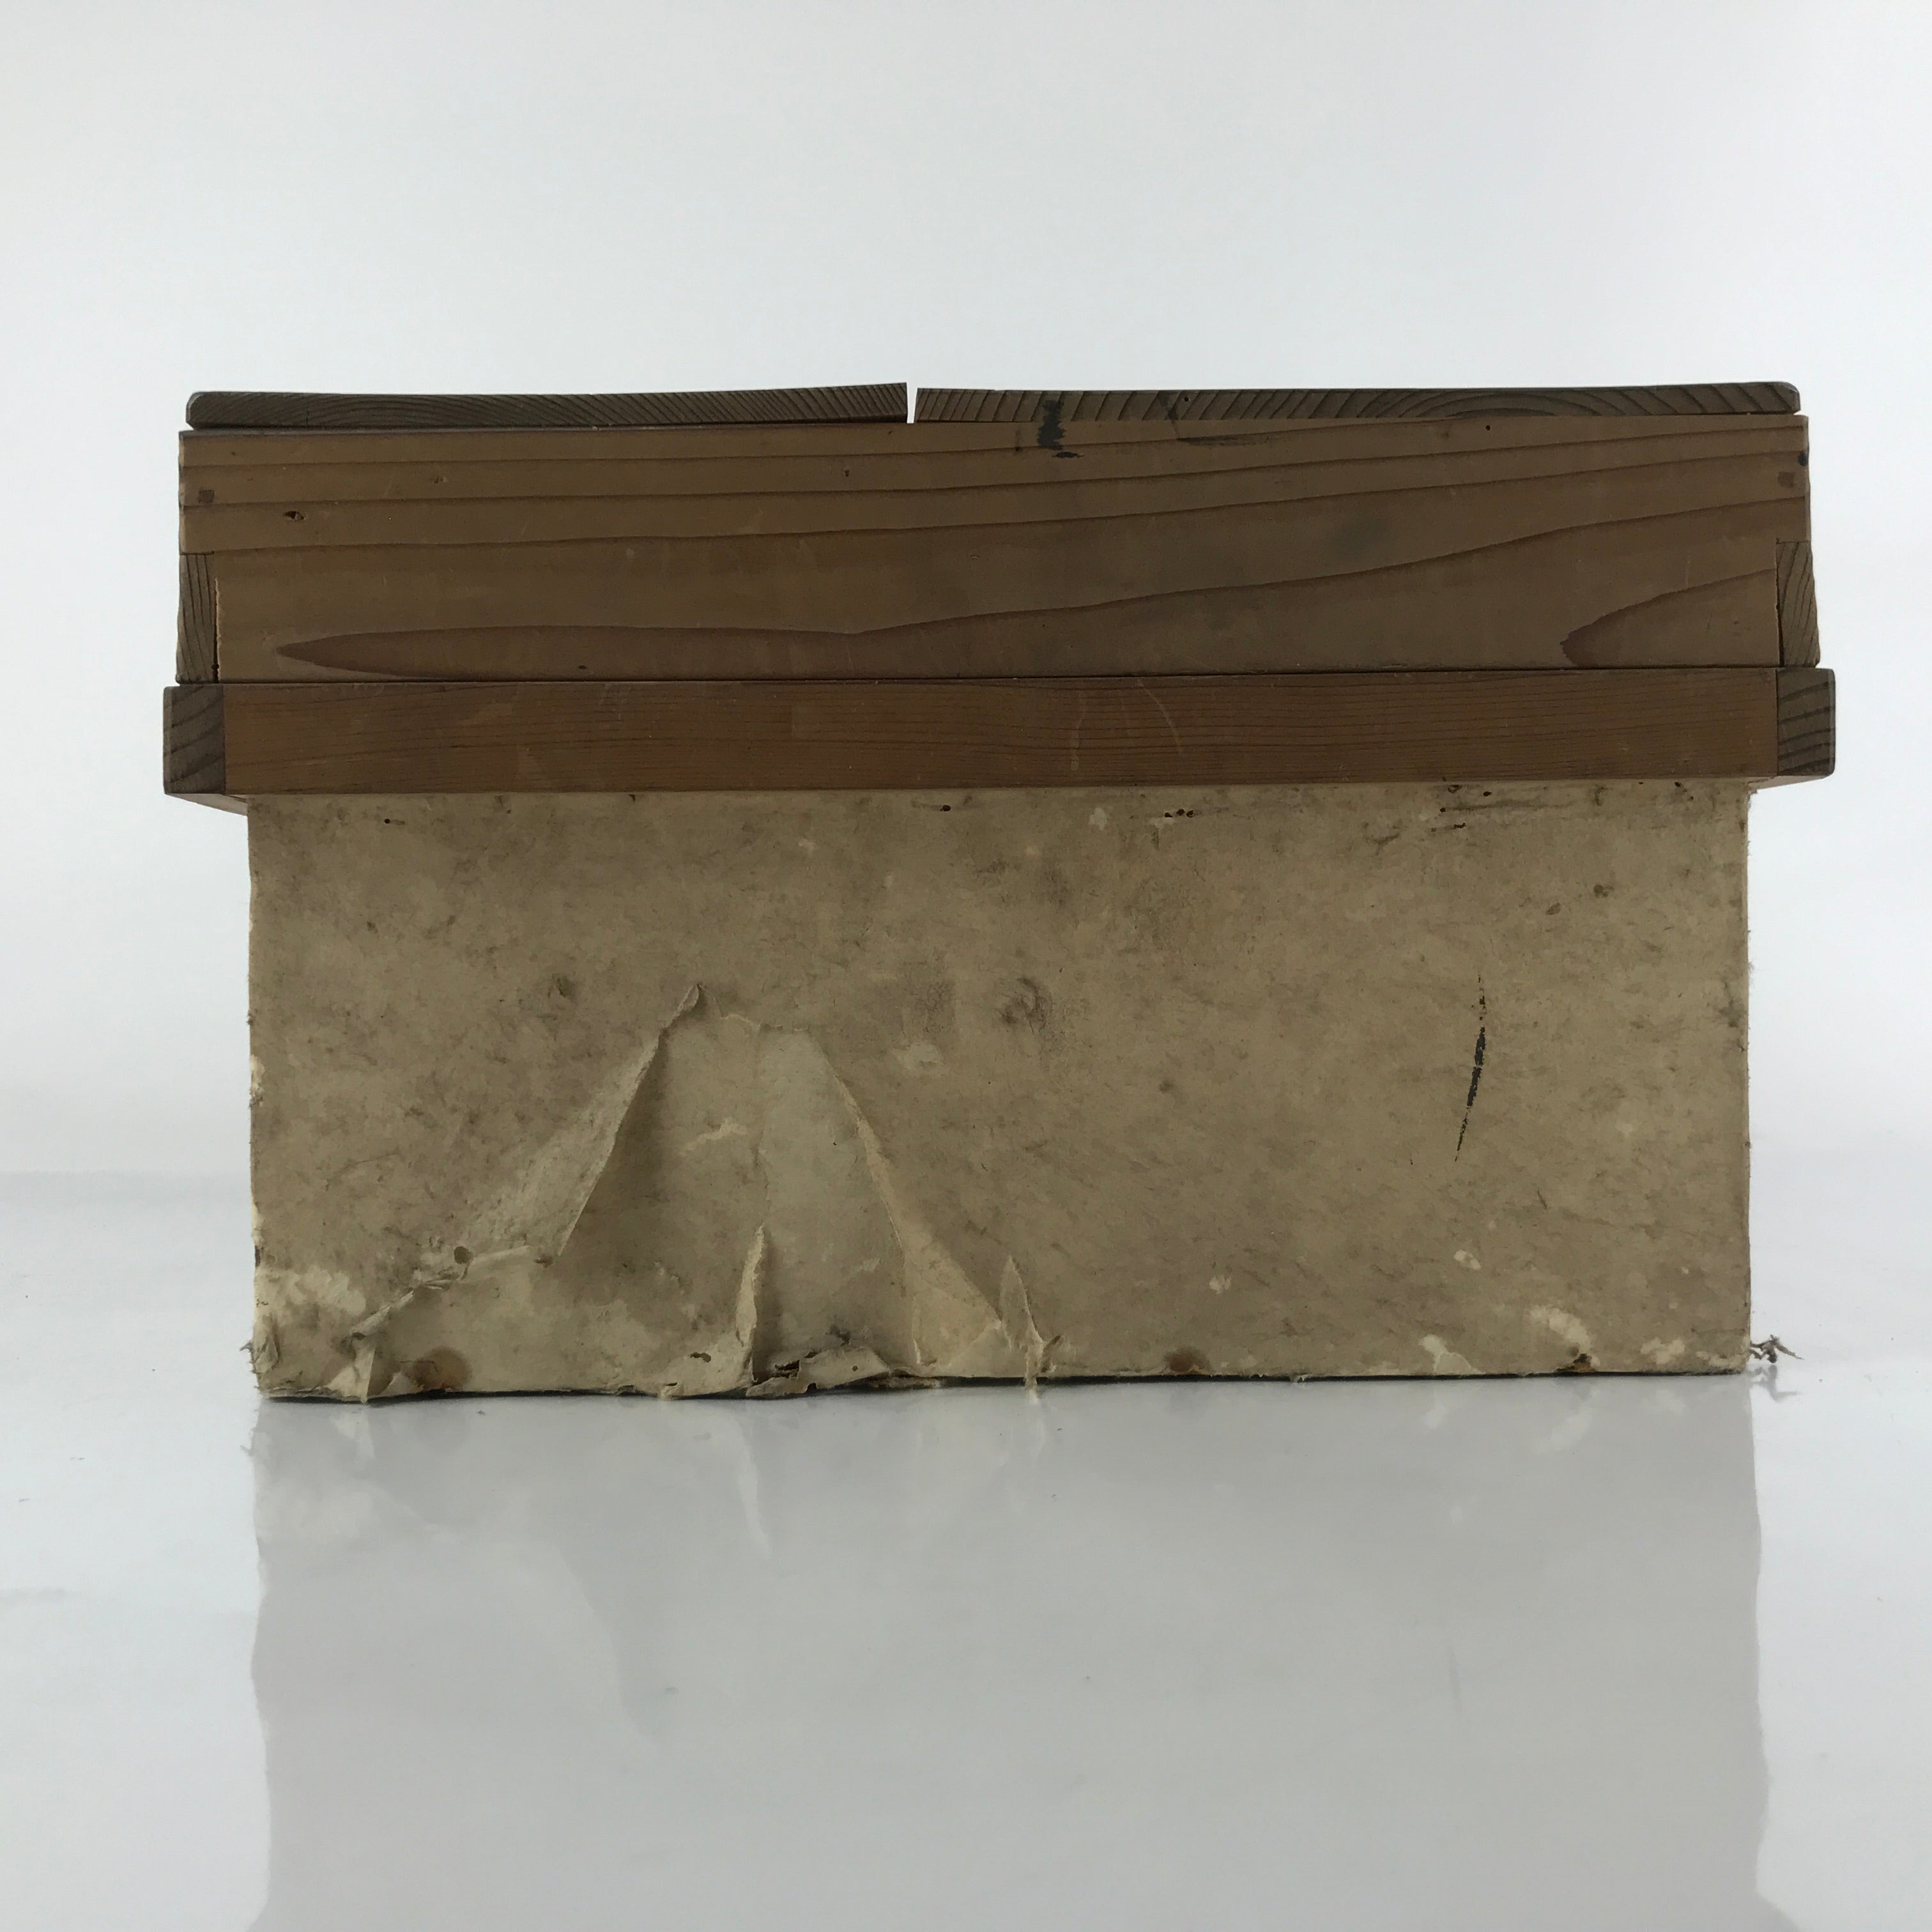 Vintage Japanese Wooden Lidded Storage Box Inside 28x43.5x14.5cm Brown X113